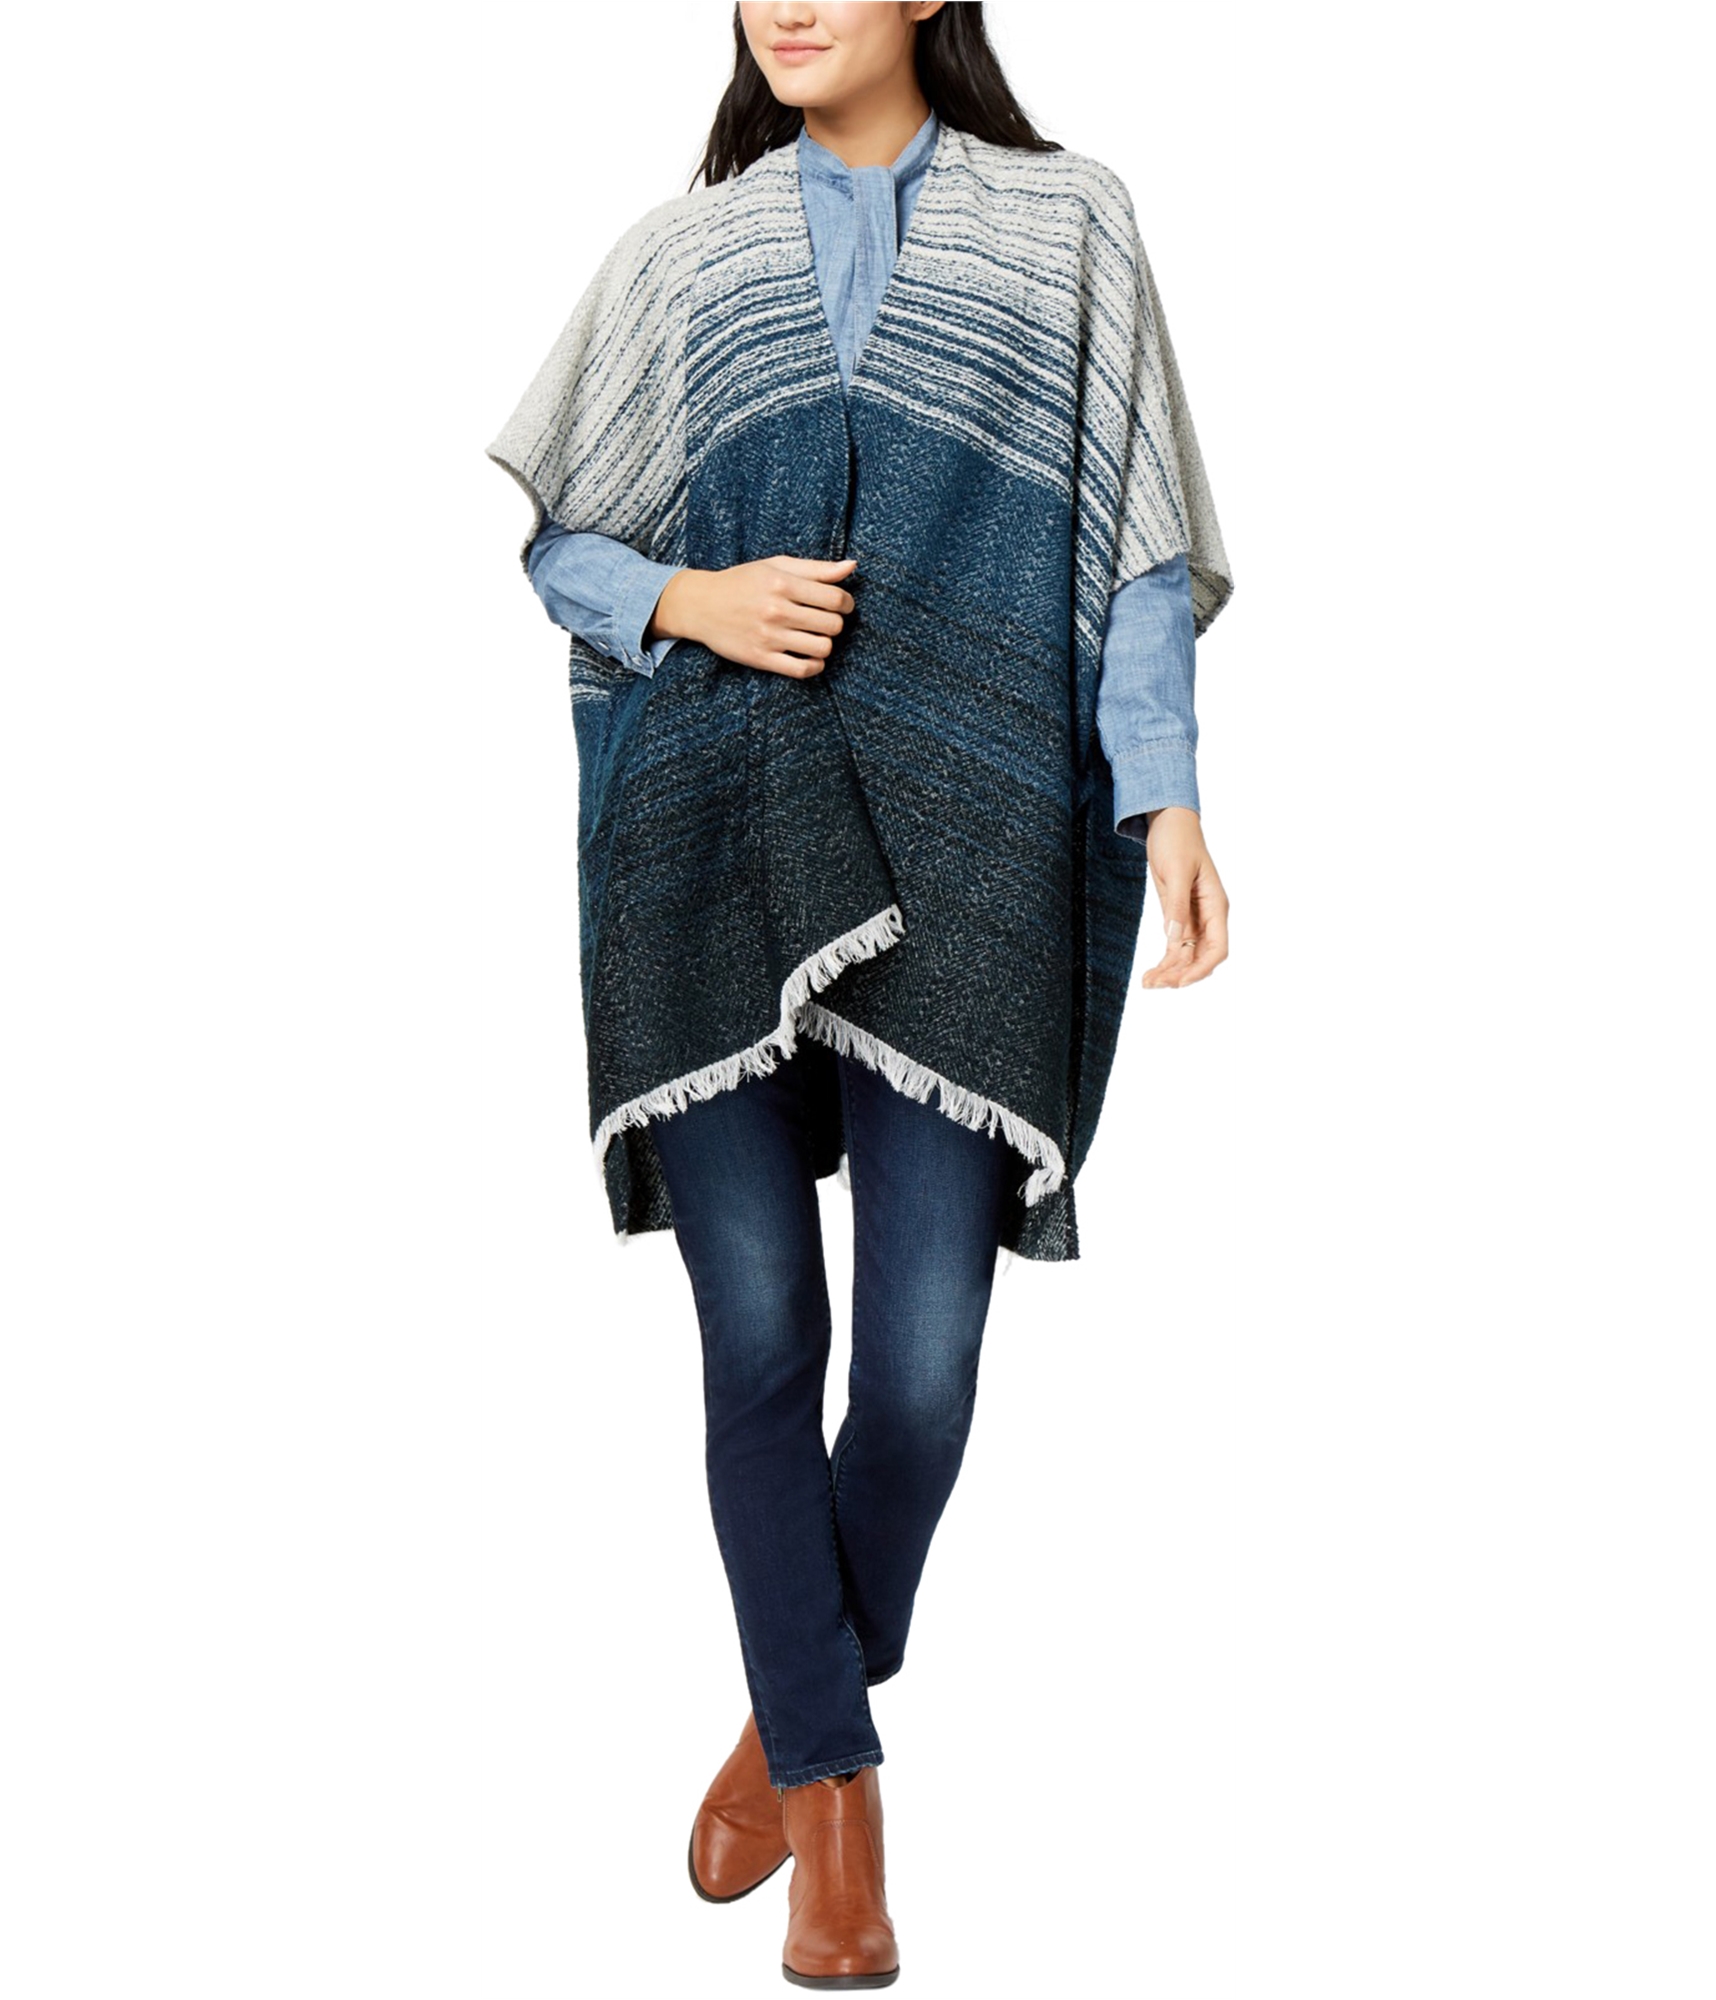 Lucky Brand Womens Striped Kimono Sweater, Blue, One Size | eBay